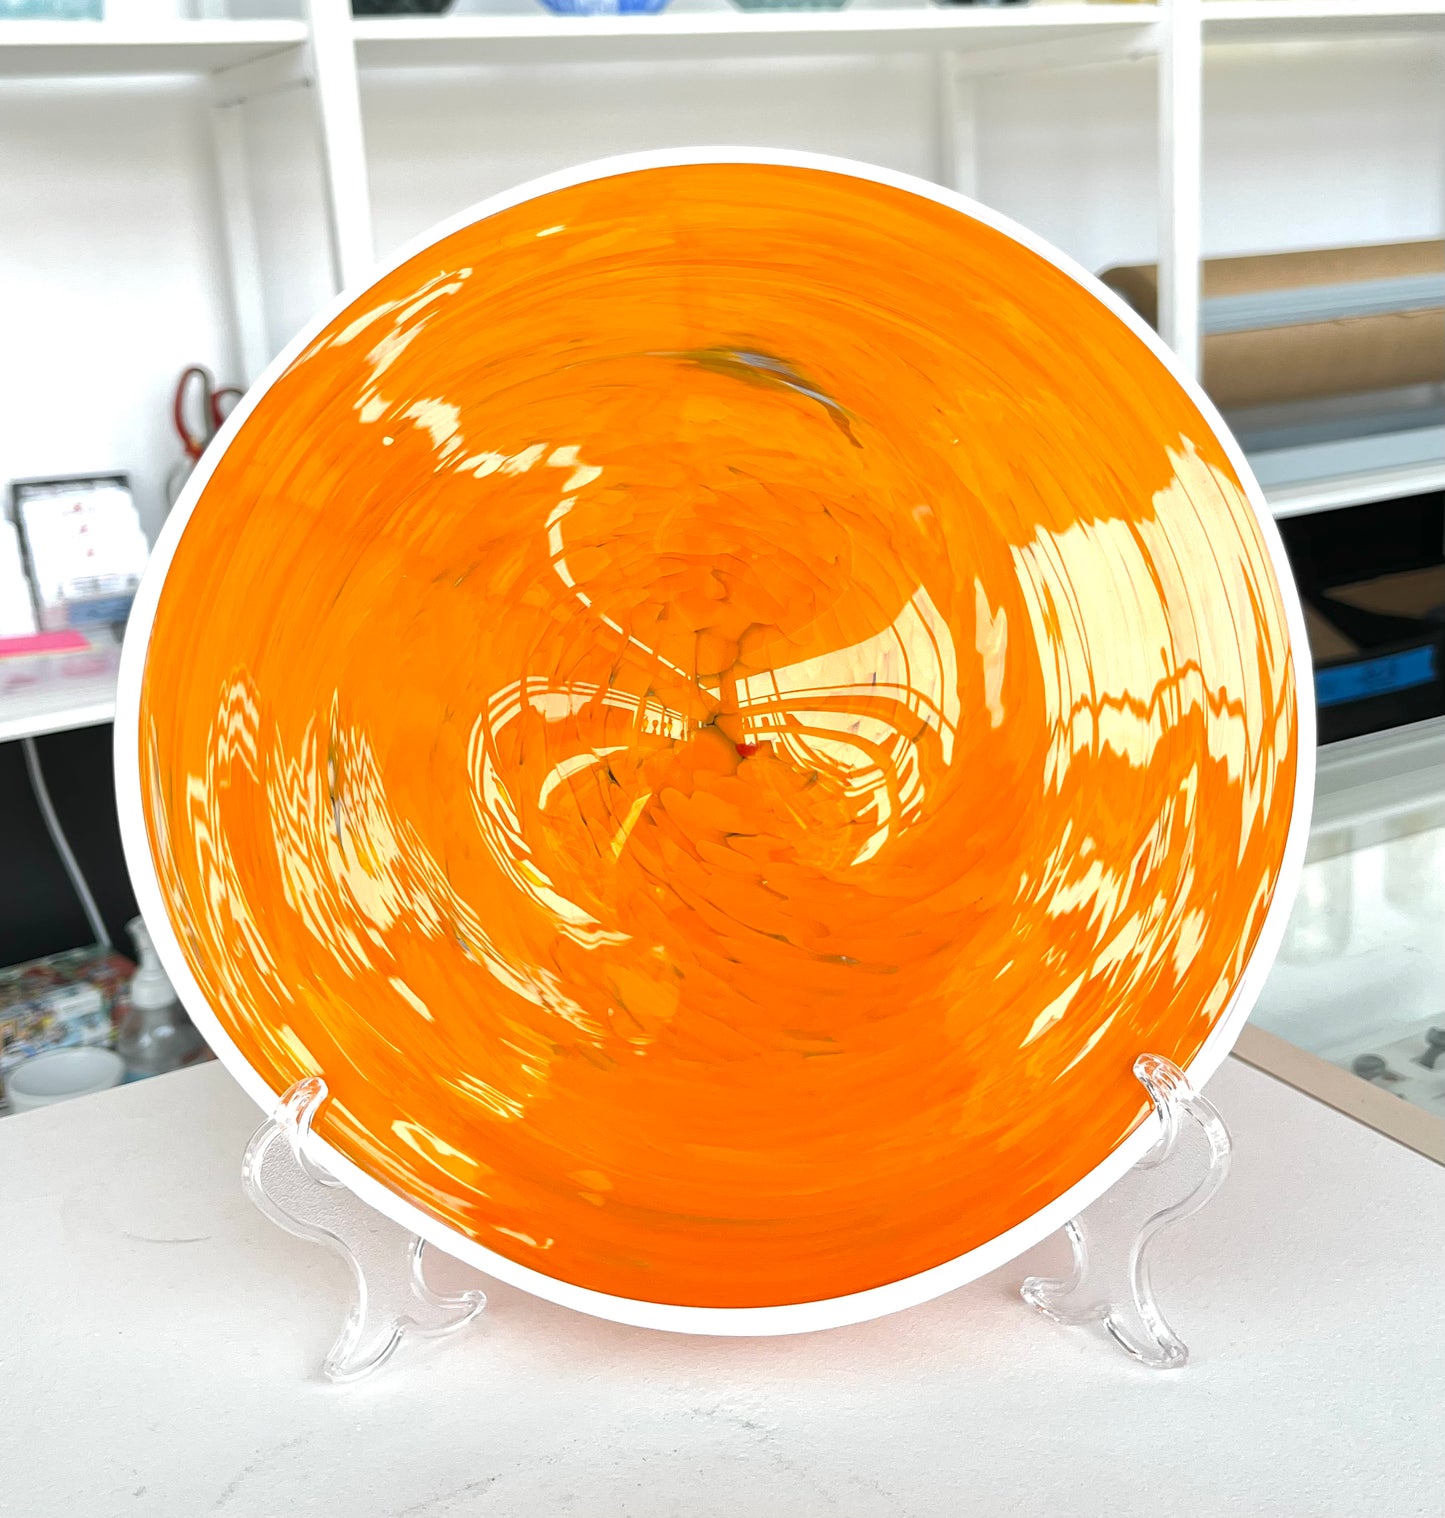 Rondel - 11.5" Orange with White Rim